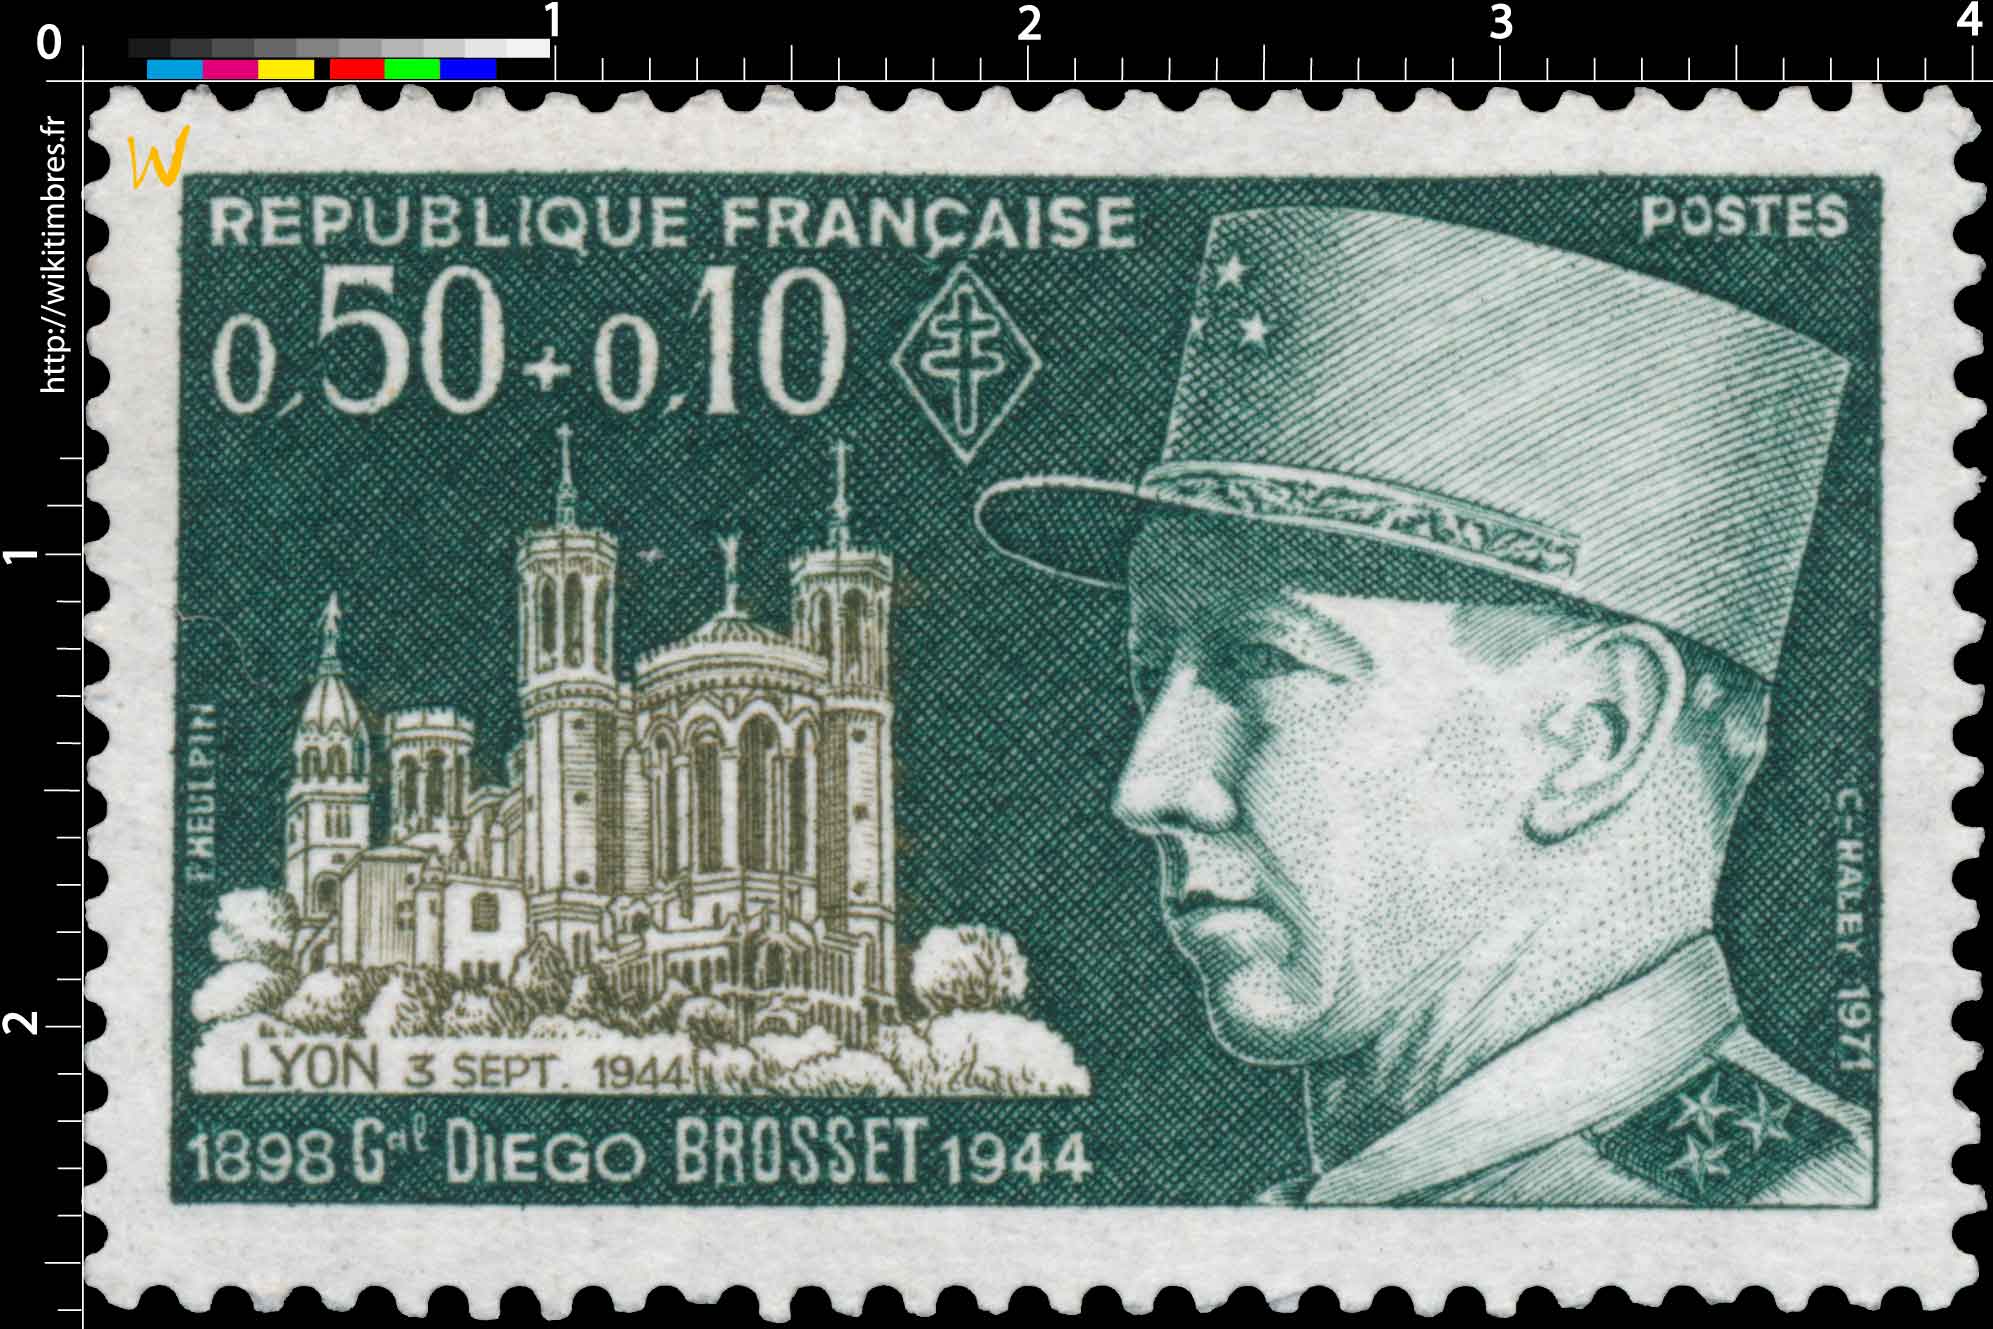 1971 Gal DIÉGO BROSSET 1898-1944 Lyon 3 SEPT. 1944